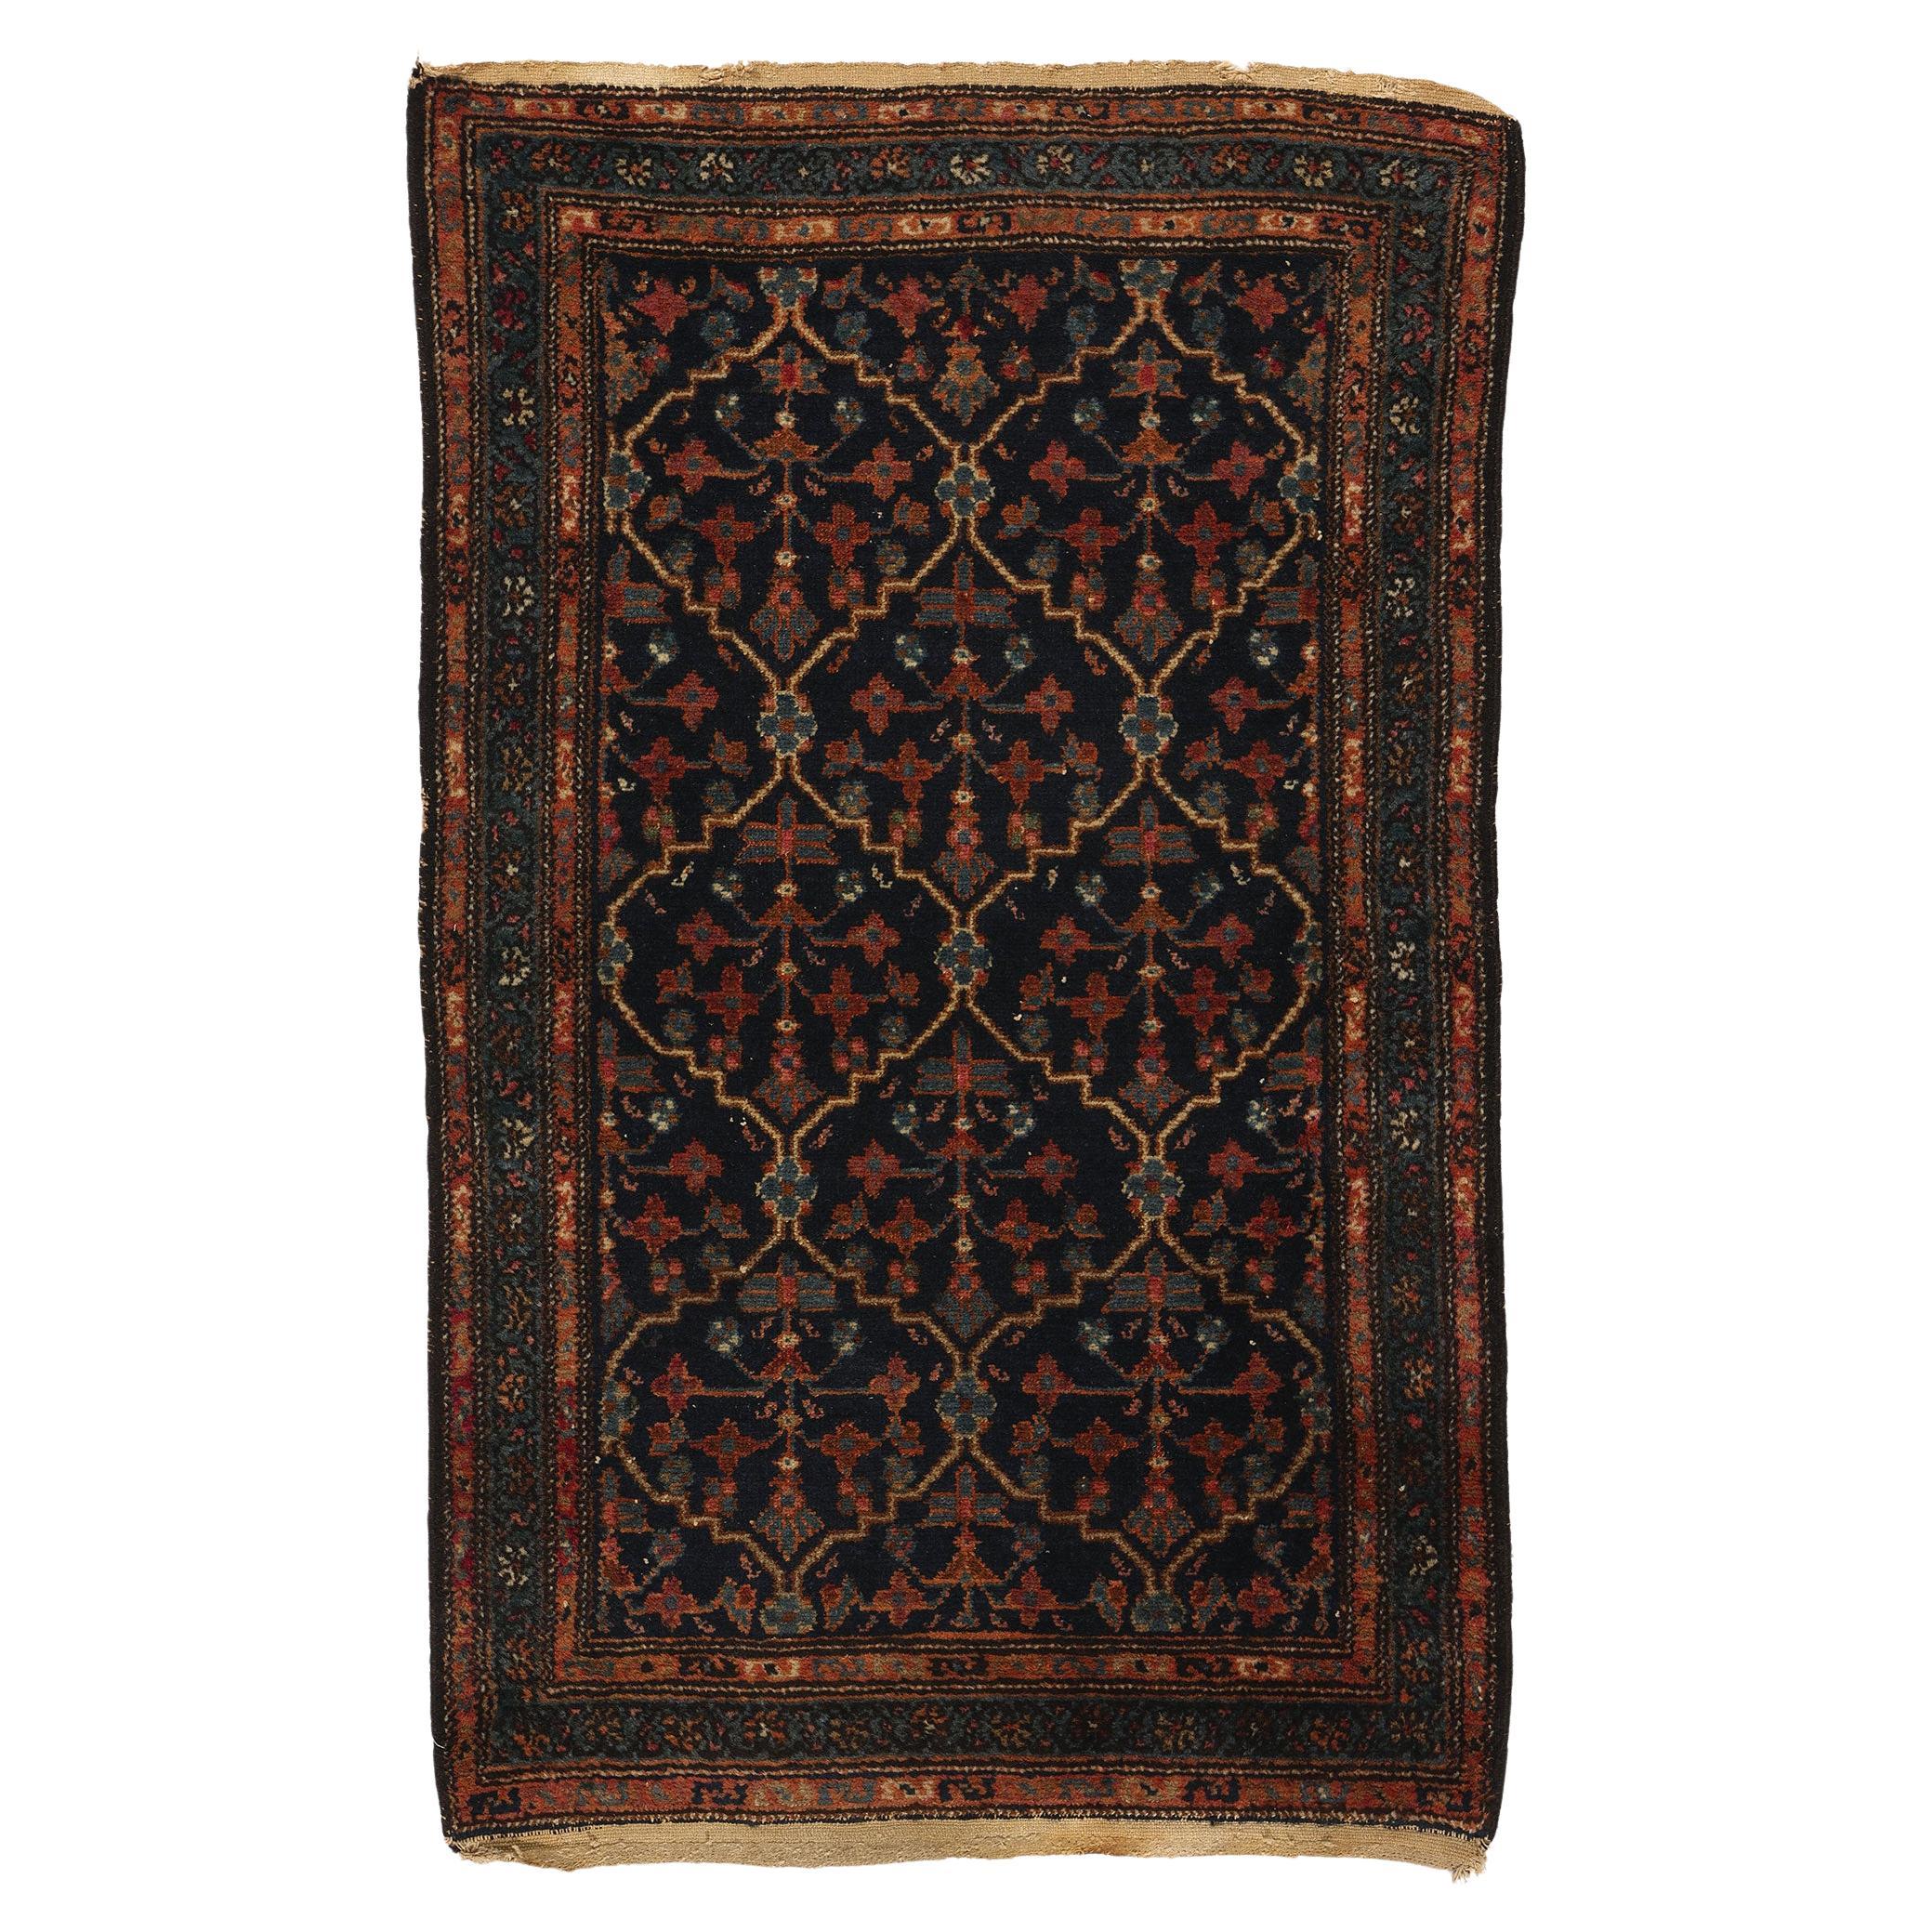 Antique Black Persian Hamadan Rug, Timeless Allure Meets Enigmatic Elegance